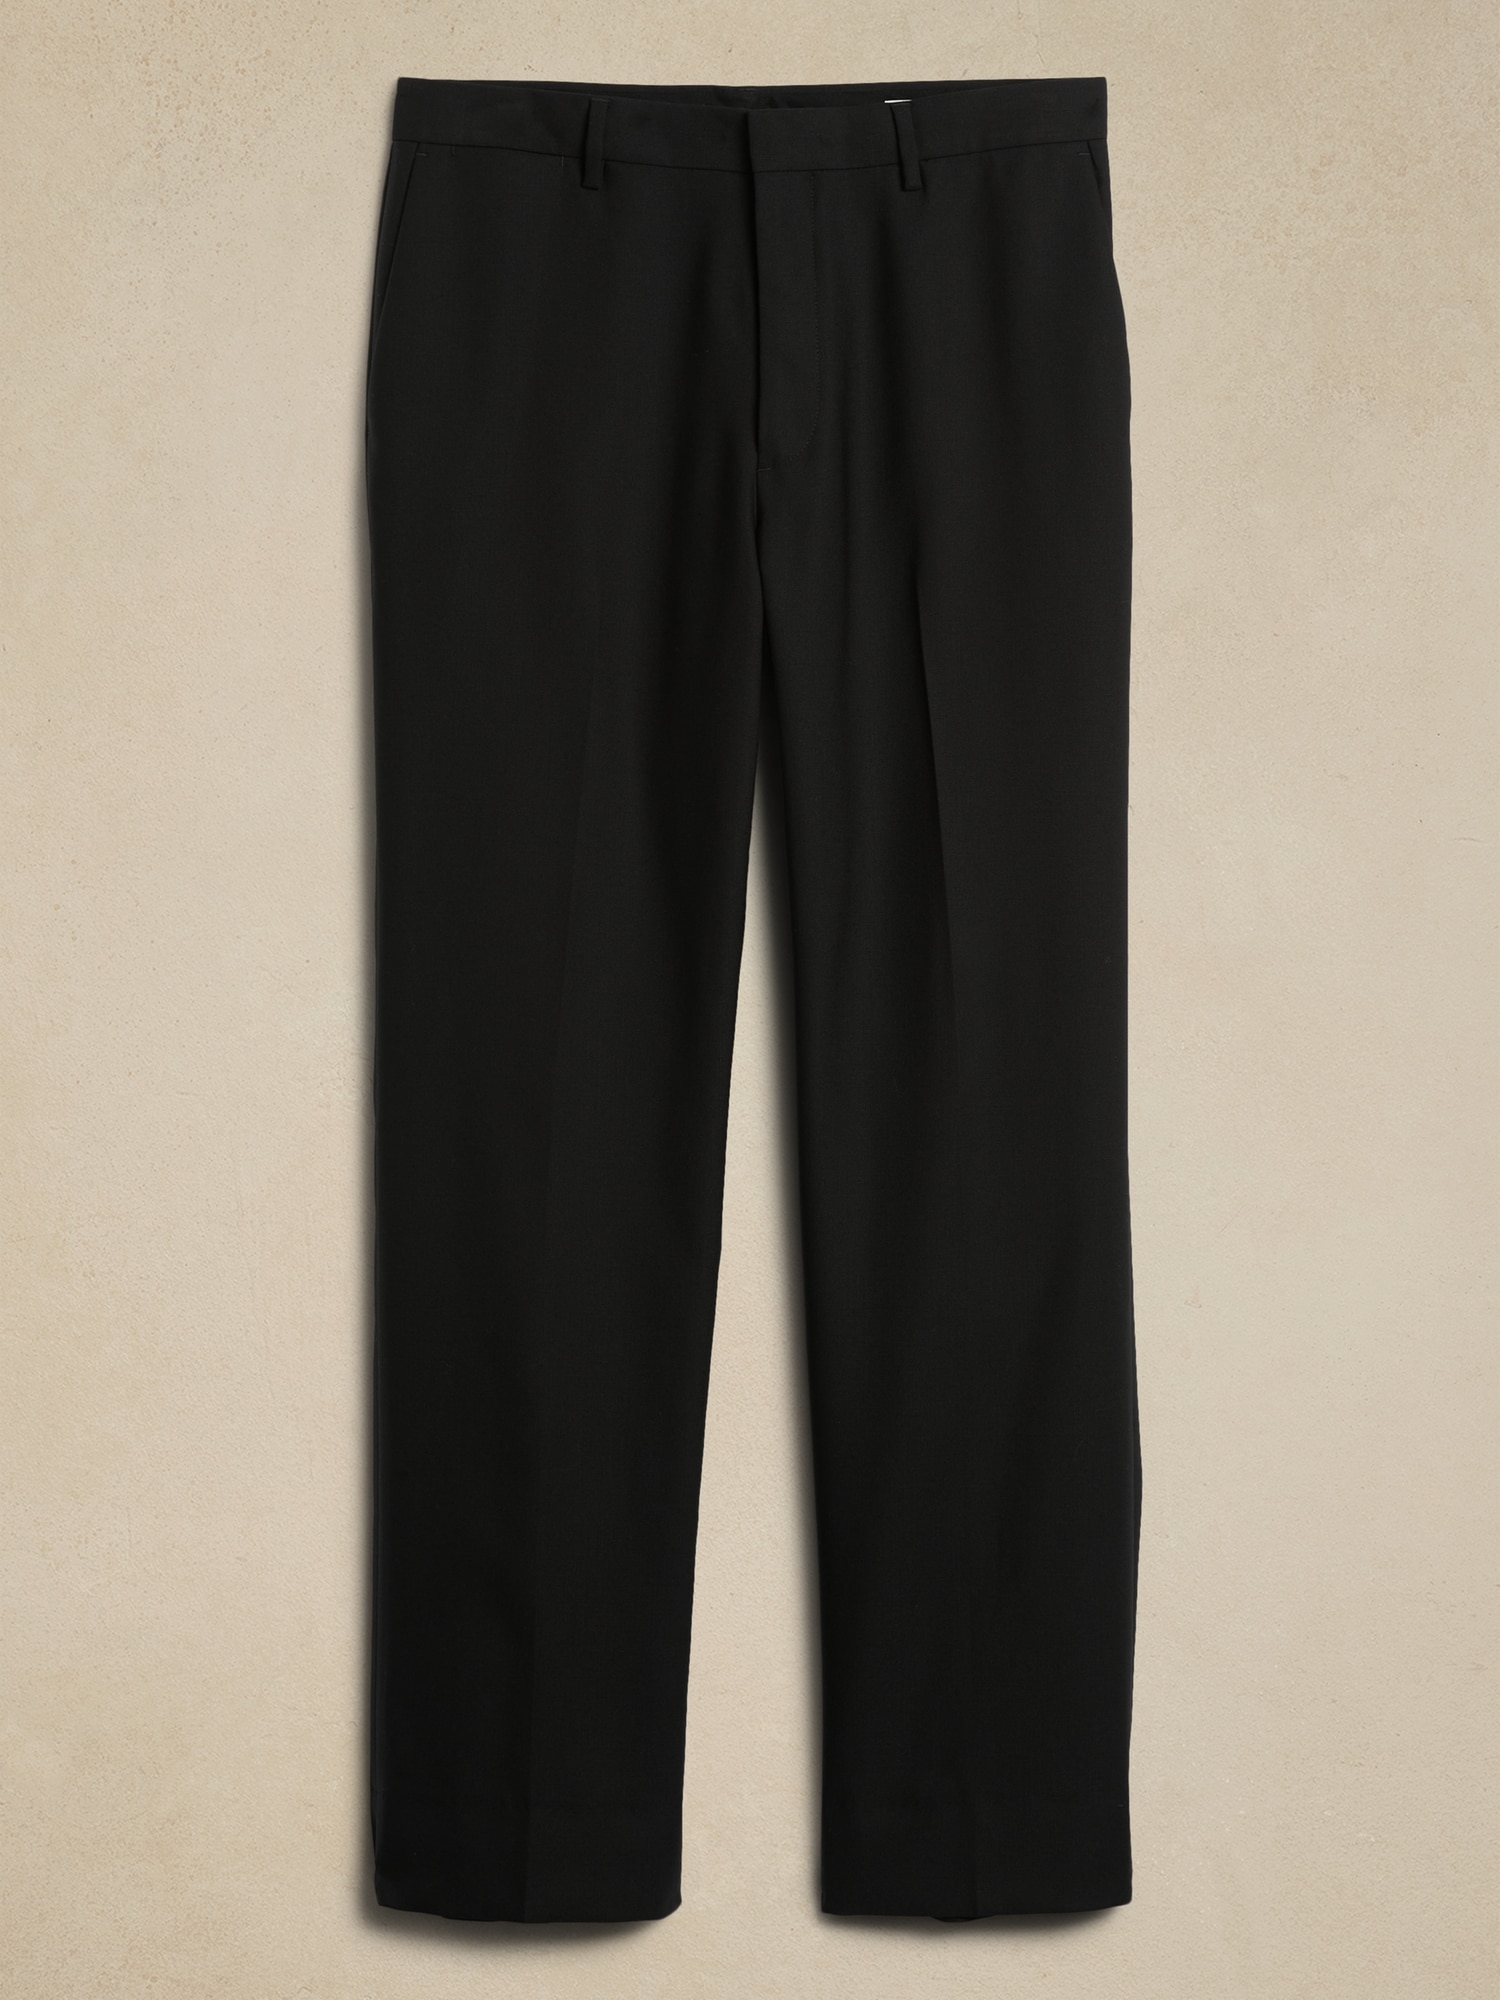 Black Merino Wool / Cotton Straight Pants WOMEN